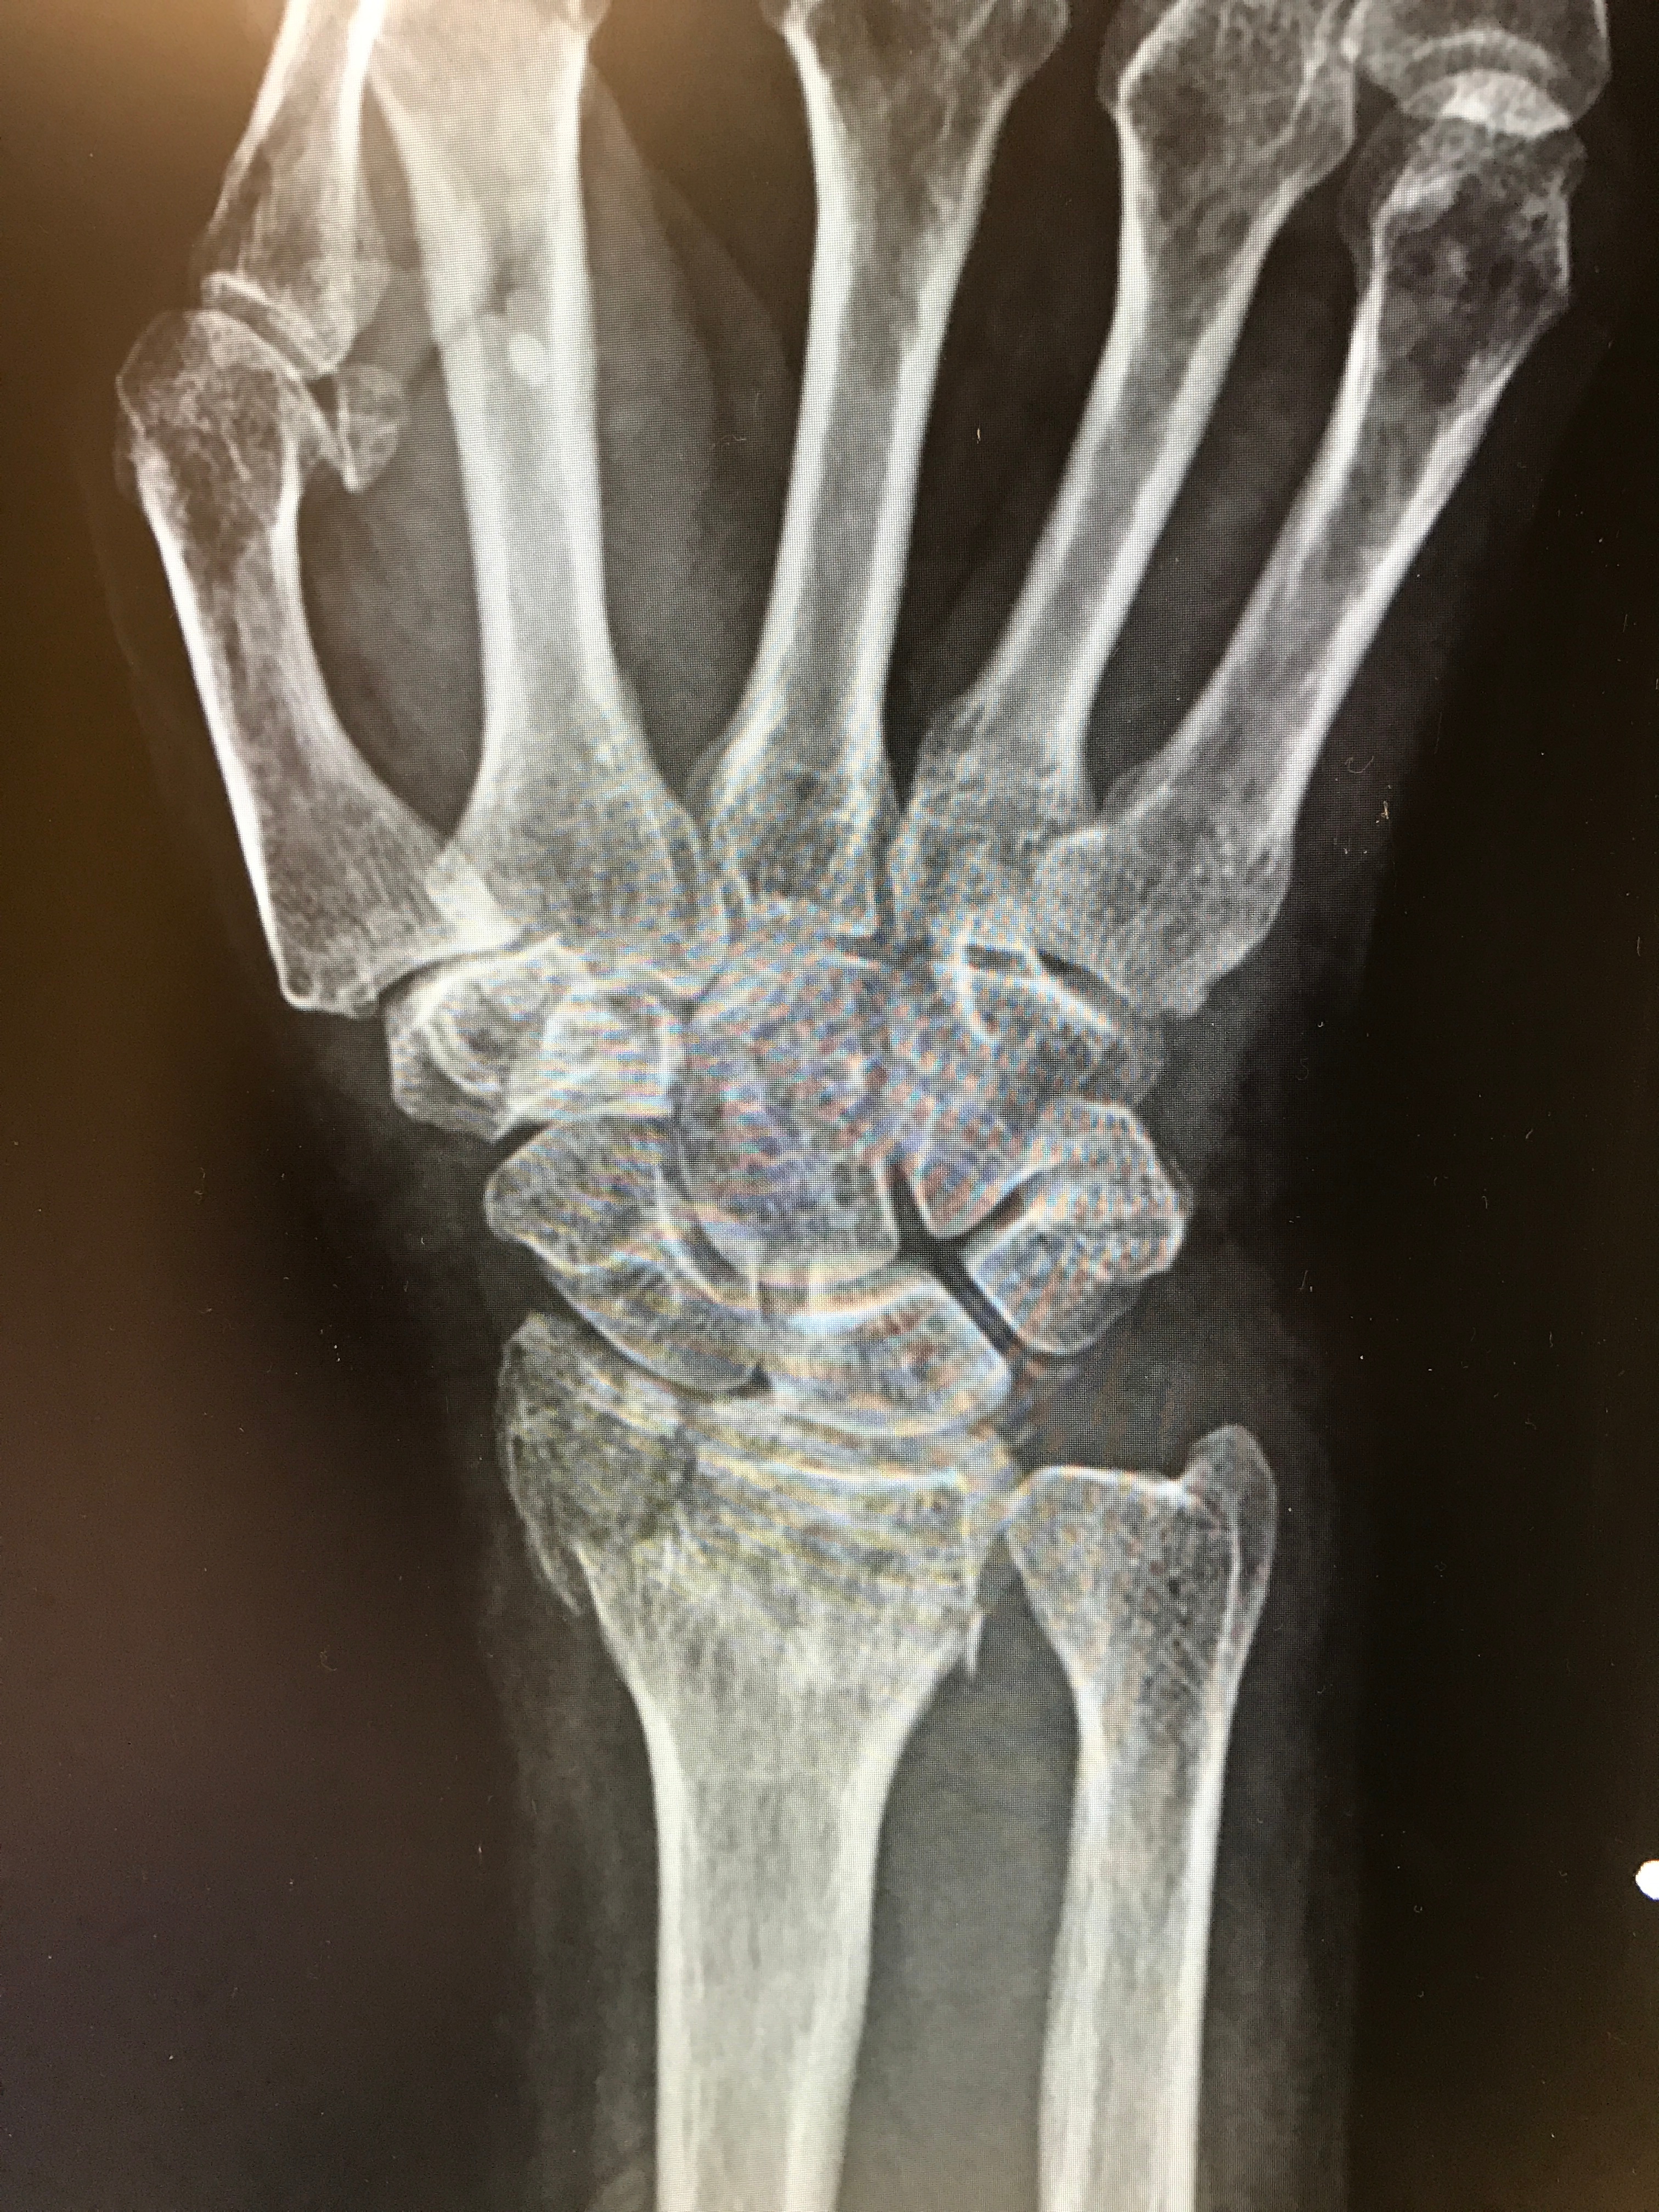 Diagnosing Pediatric Forearm Fractures: Radiograph or Ultrasound?